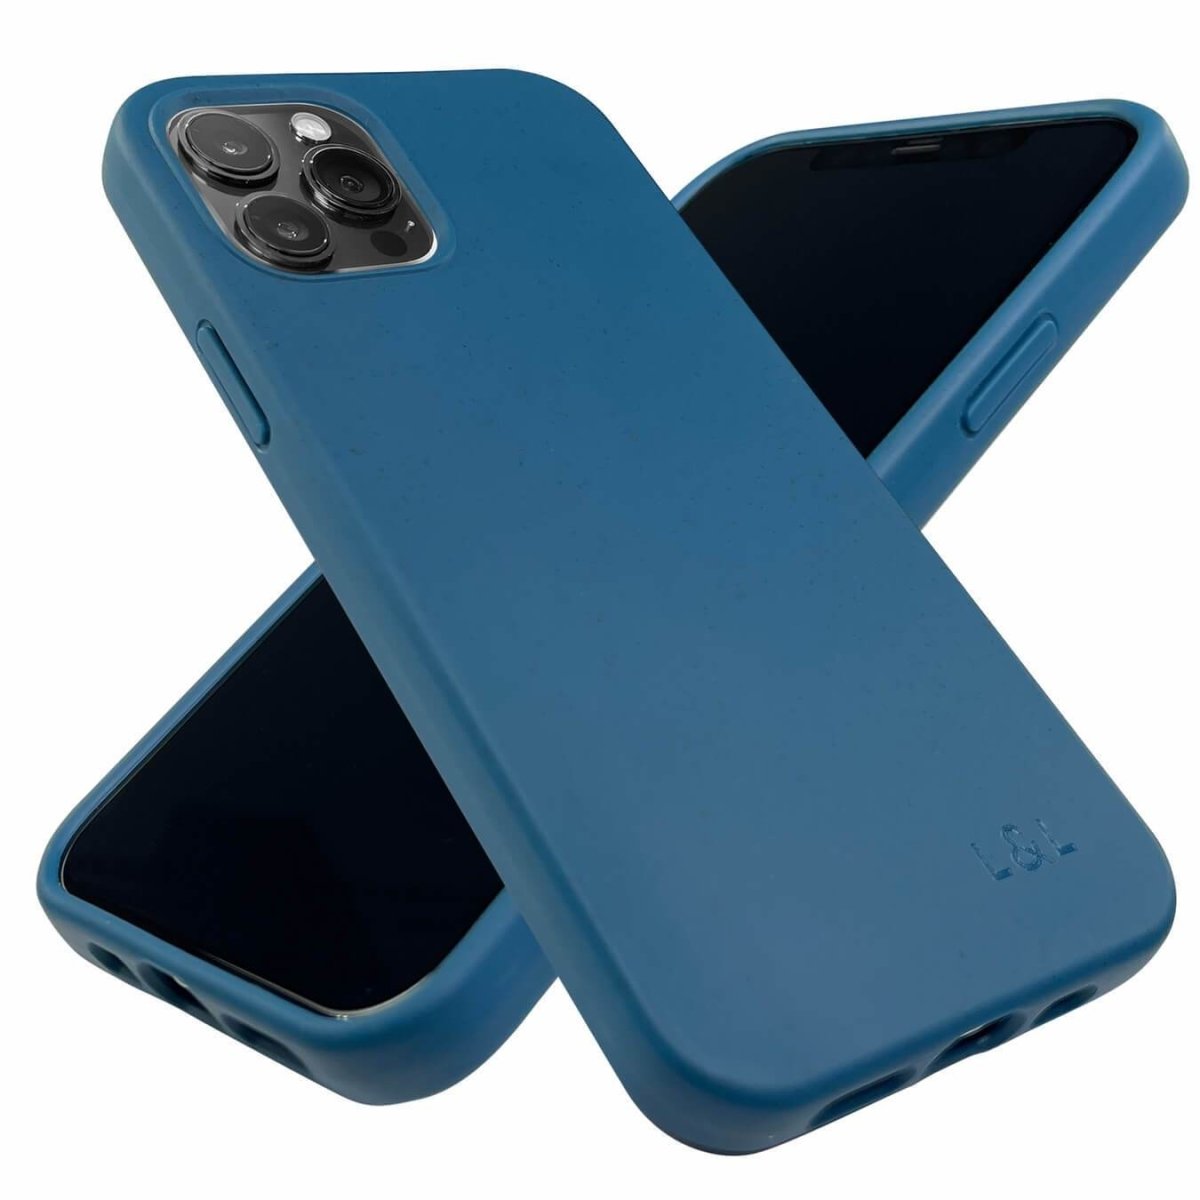 Biodegradable iPhone 12 / 12 Pro Case - Deep Blue - Loam & Lore